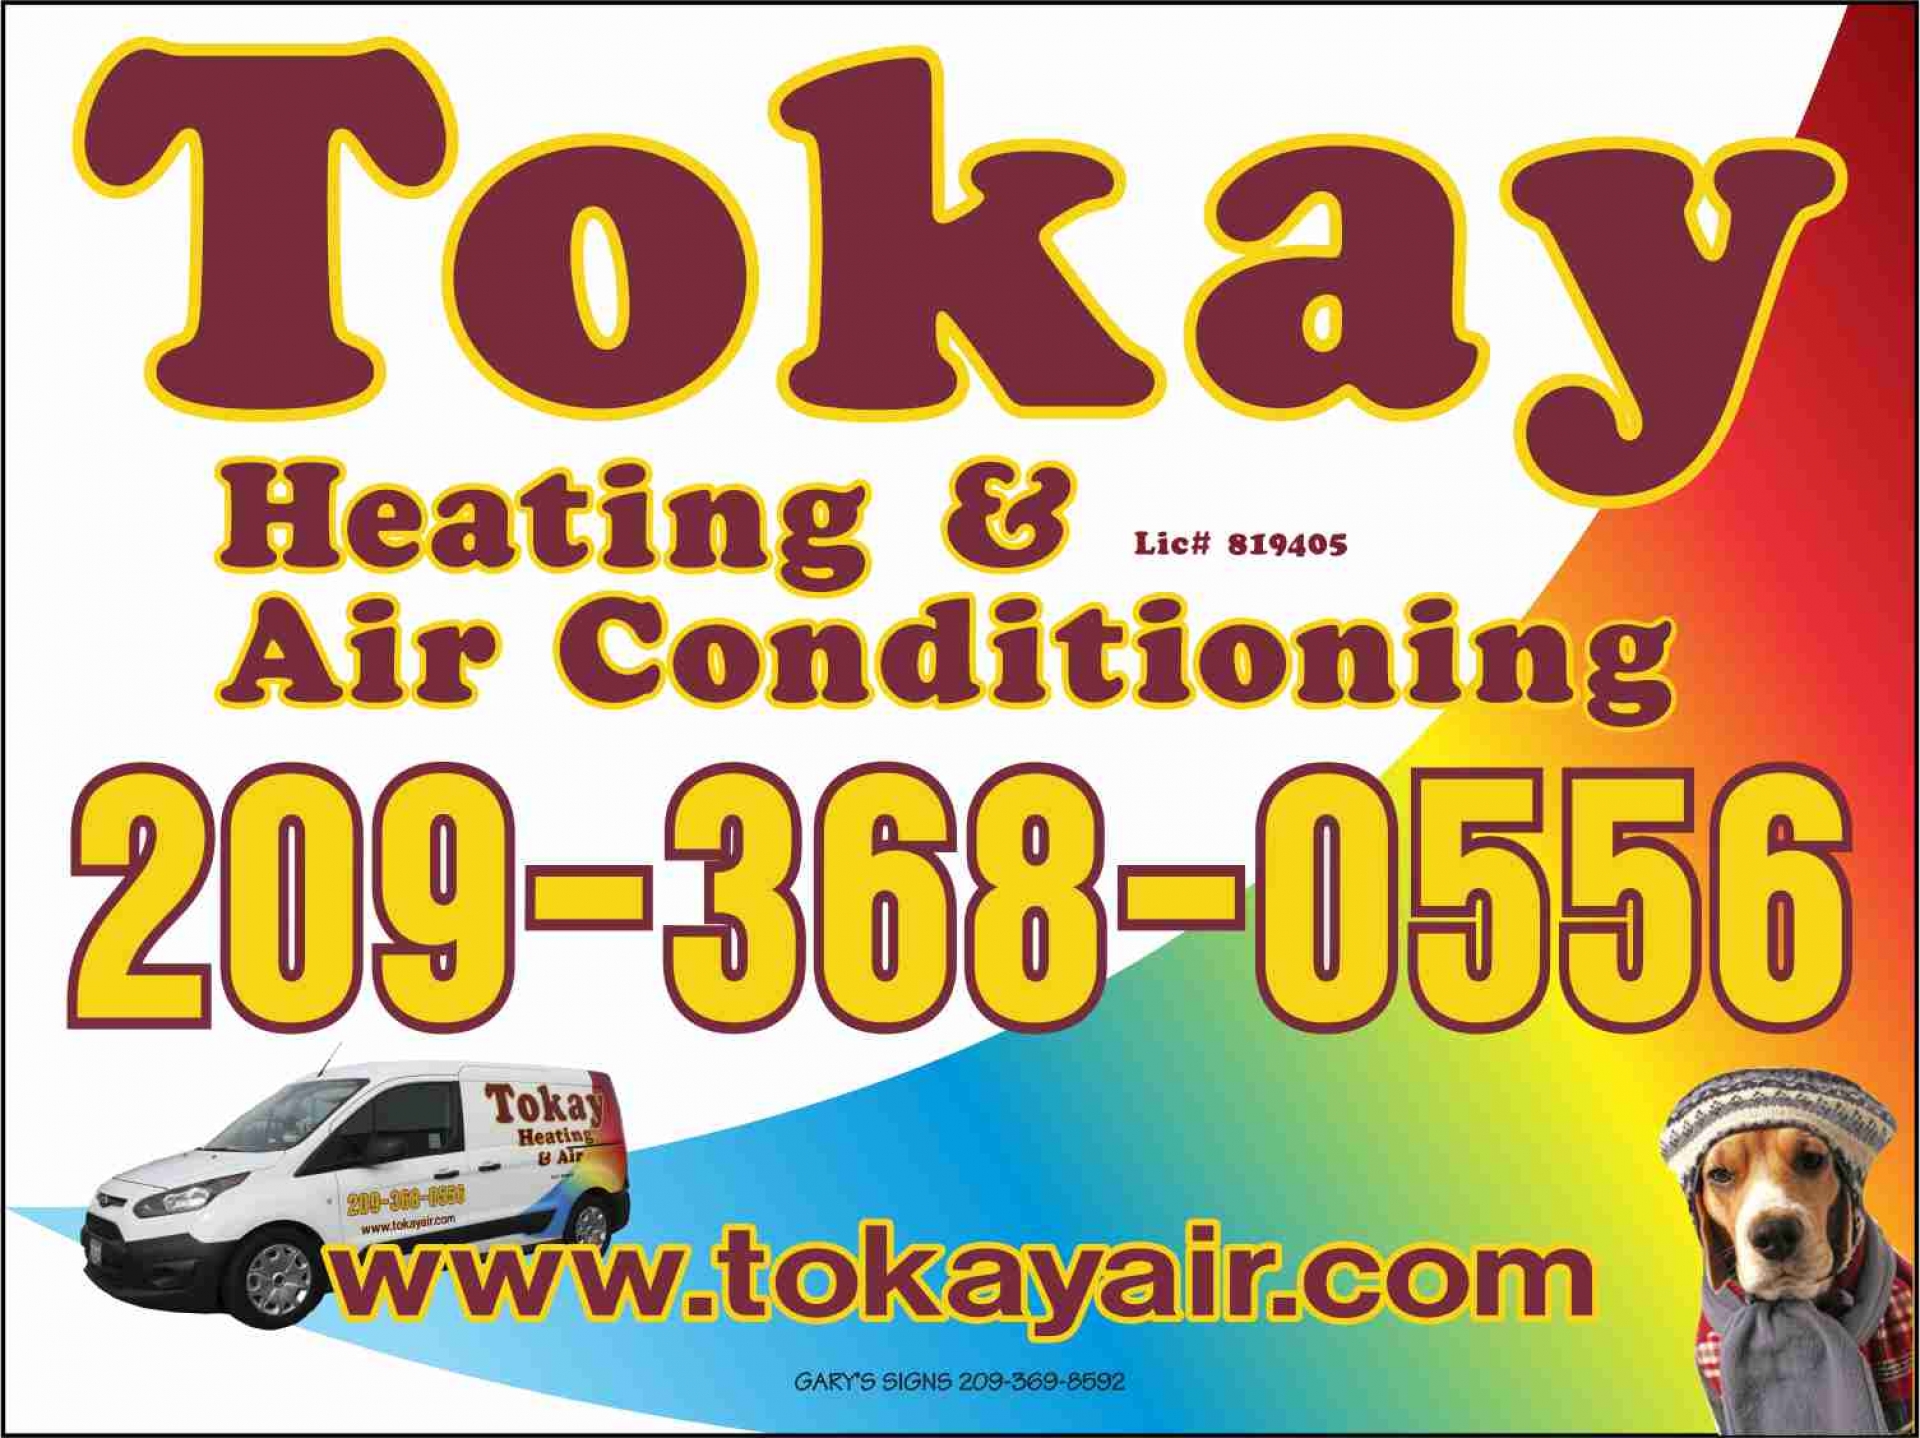 Tokay Heating and Air Conditioning company logo